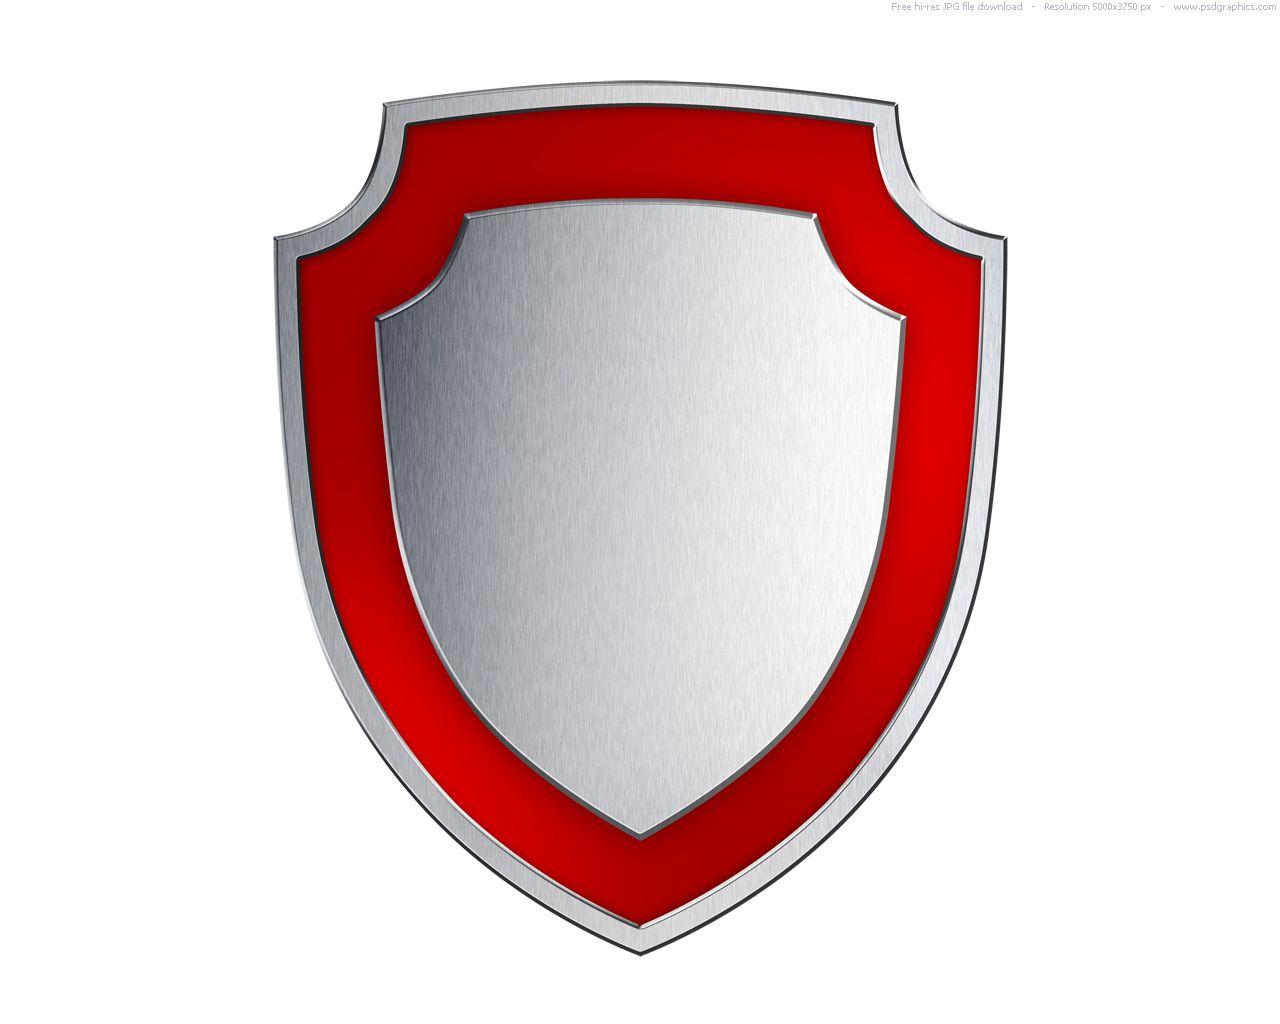 Round Shield Logo - Free Image Of Shield, Download Free Clip Art, Free Clip Art